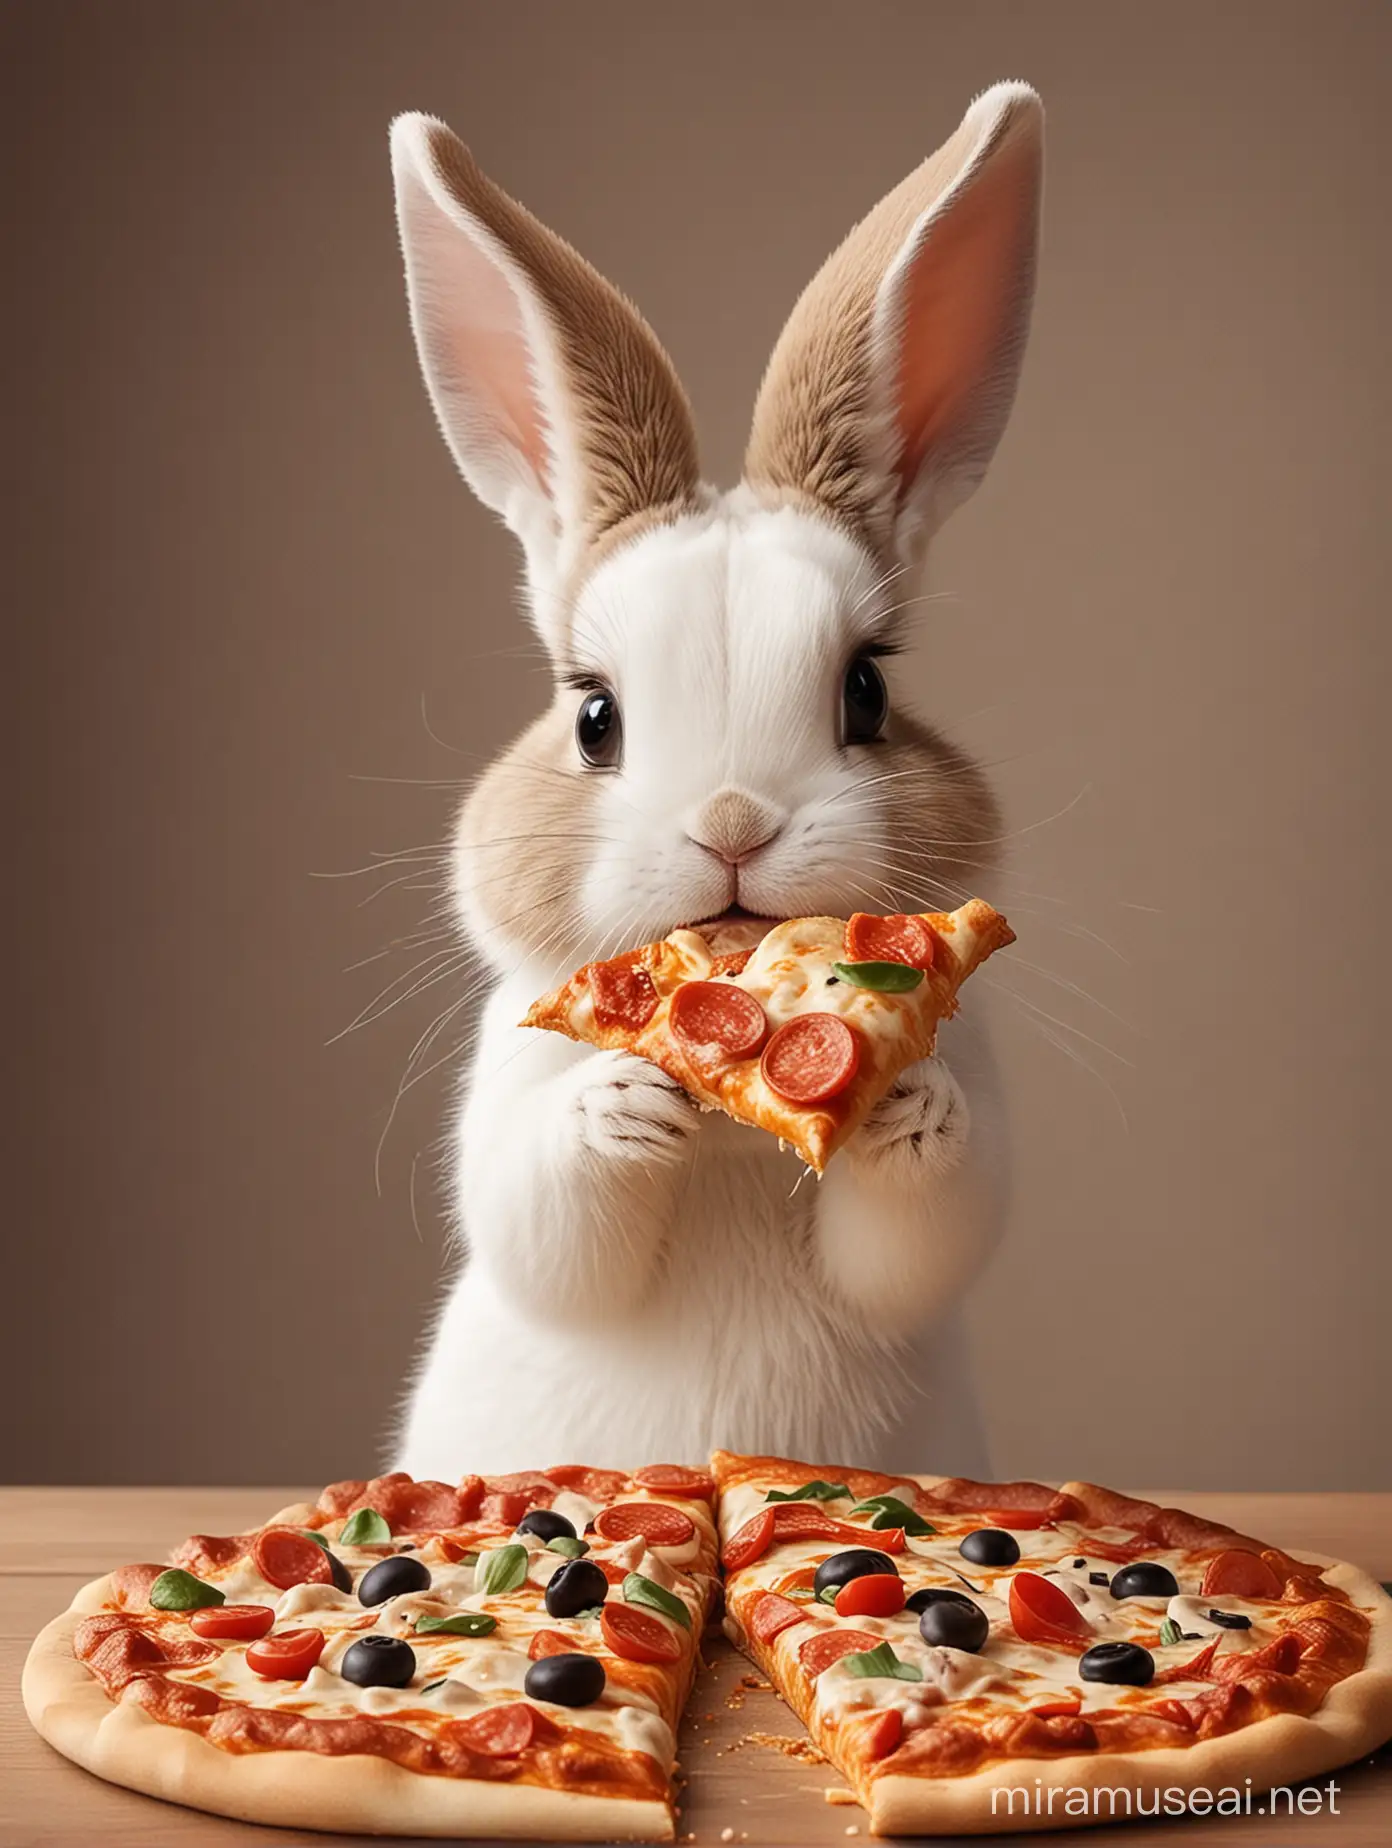 Adorable Rabbit Enjoying a Gourmet Pizza